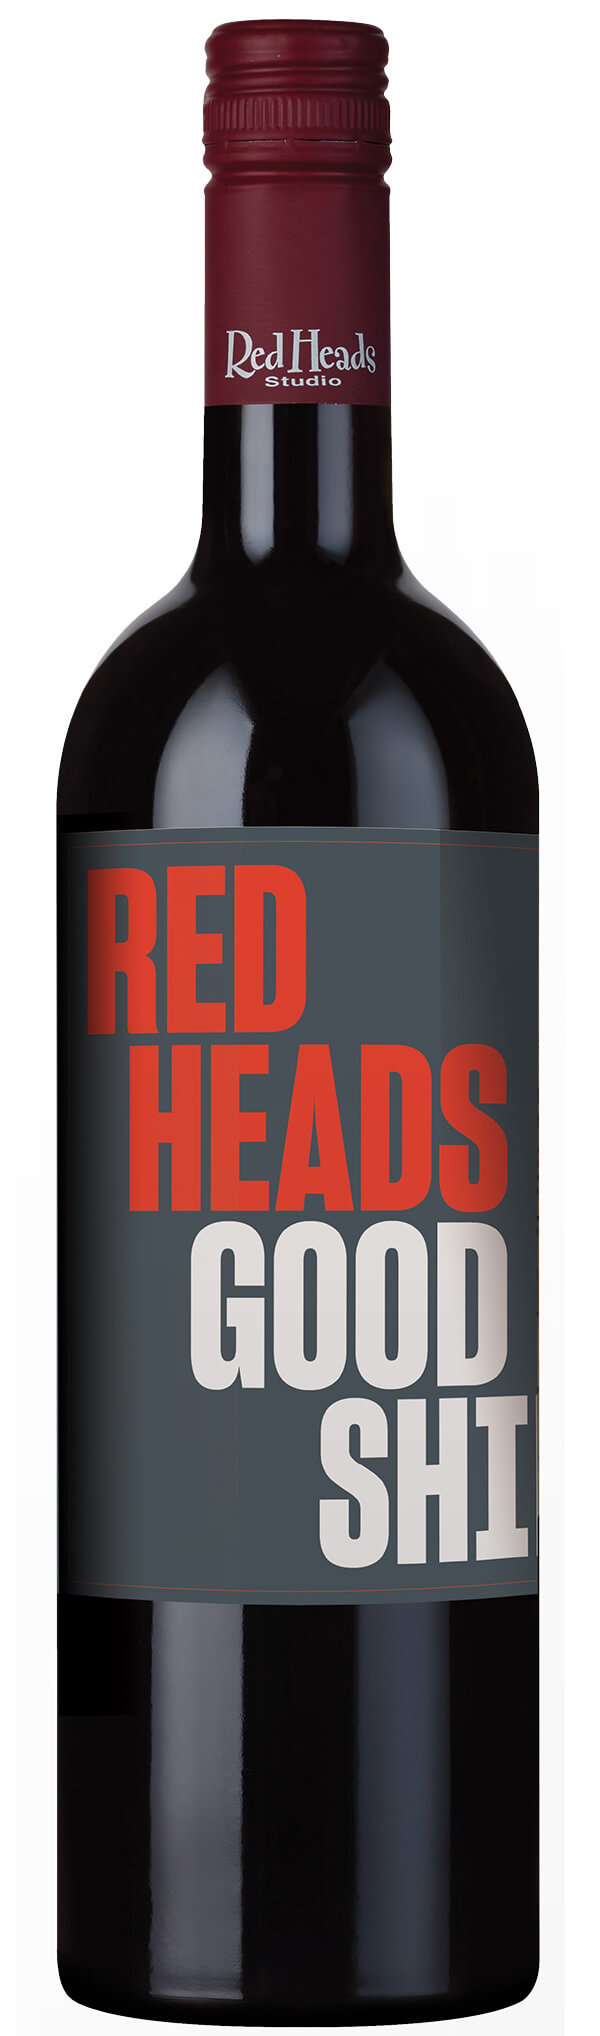 Red heads good shiraz